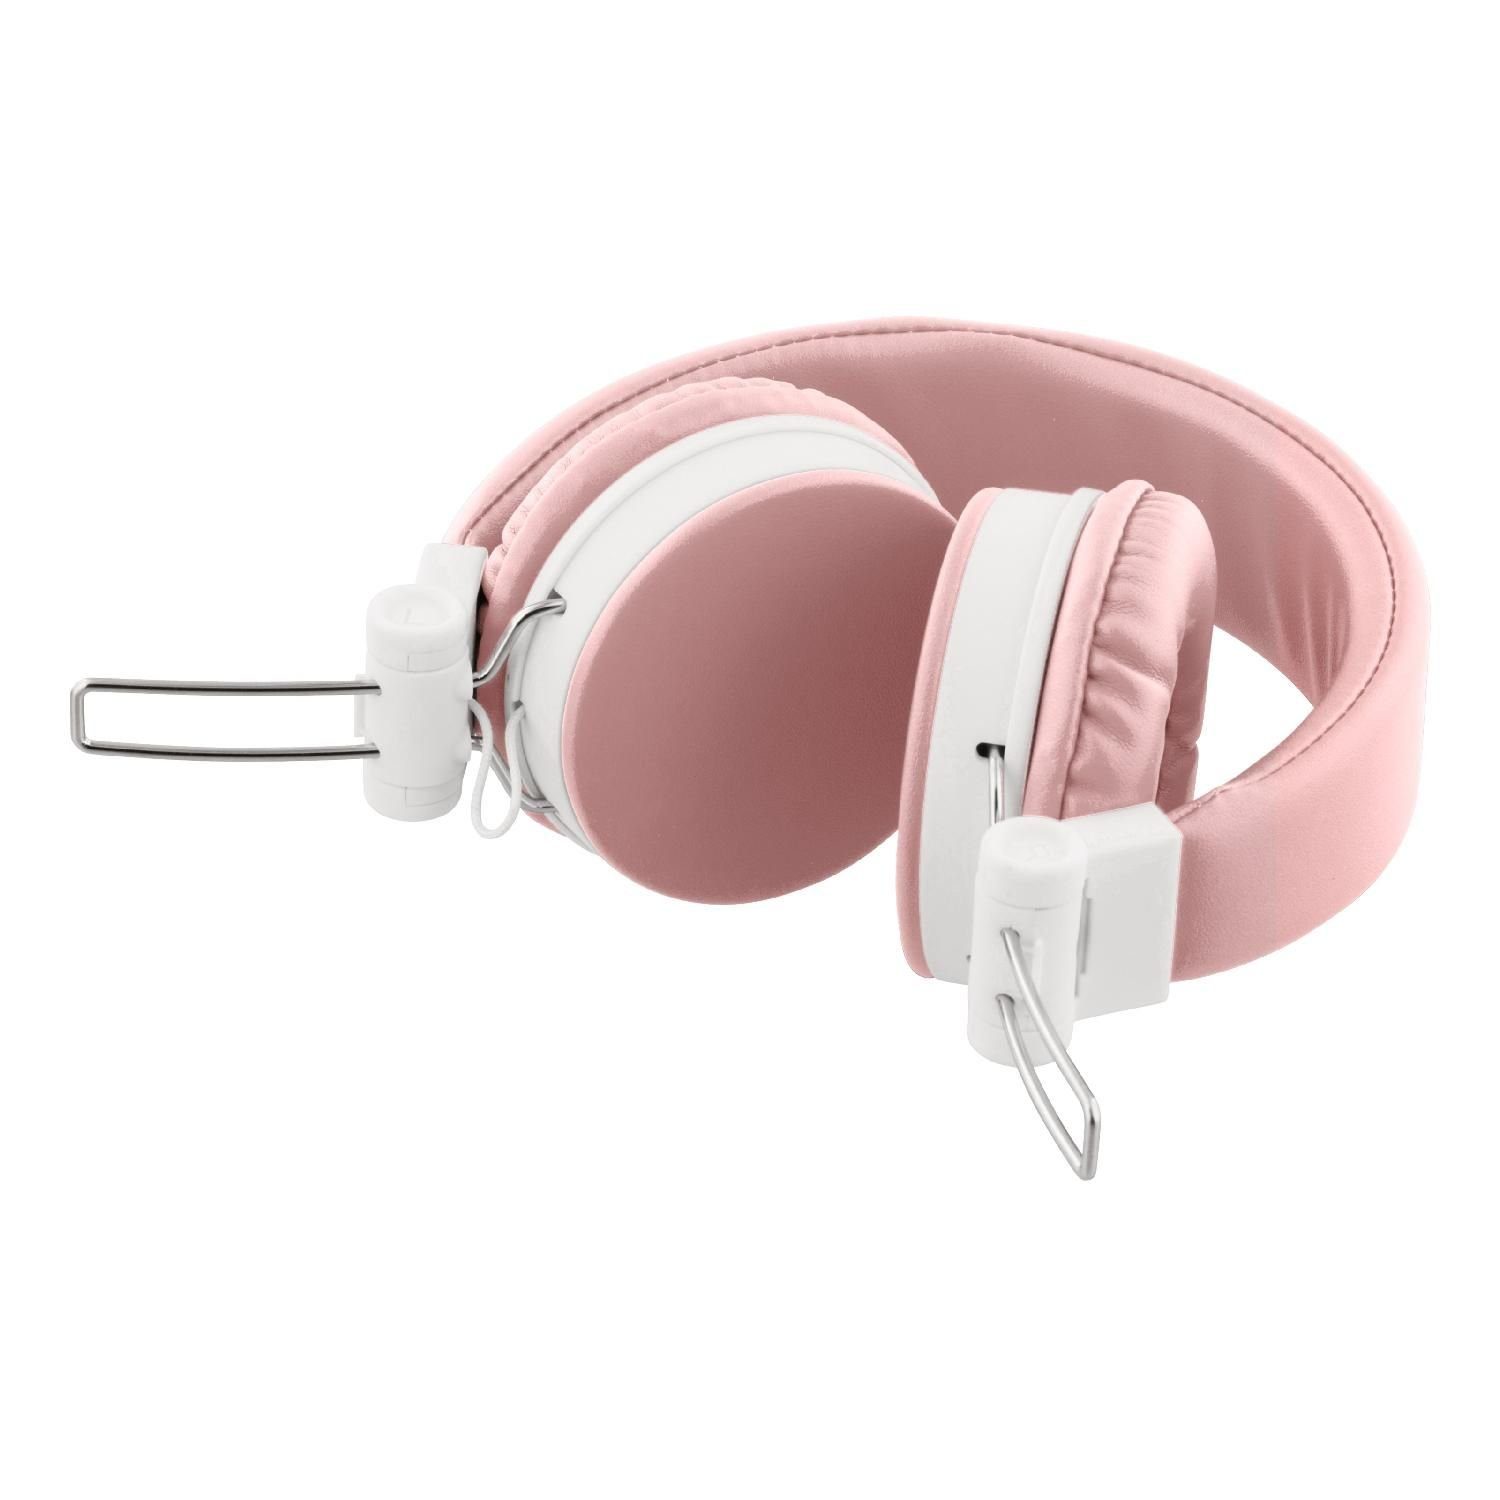 faltbares Mikrofon, On-Ear-Kopfhörer rosa, Herstellergarantie) 1,2m (integriertes Kabel Klinkenanschluss / Jahre STREETZ pink 5 Headset, Ohrpolster inkl. Kopfhörer 3.5mm